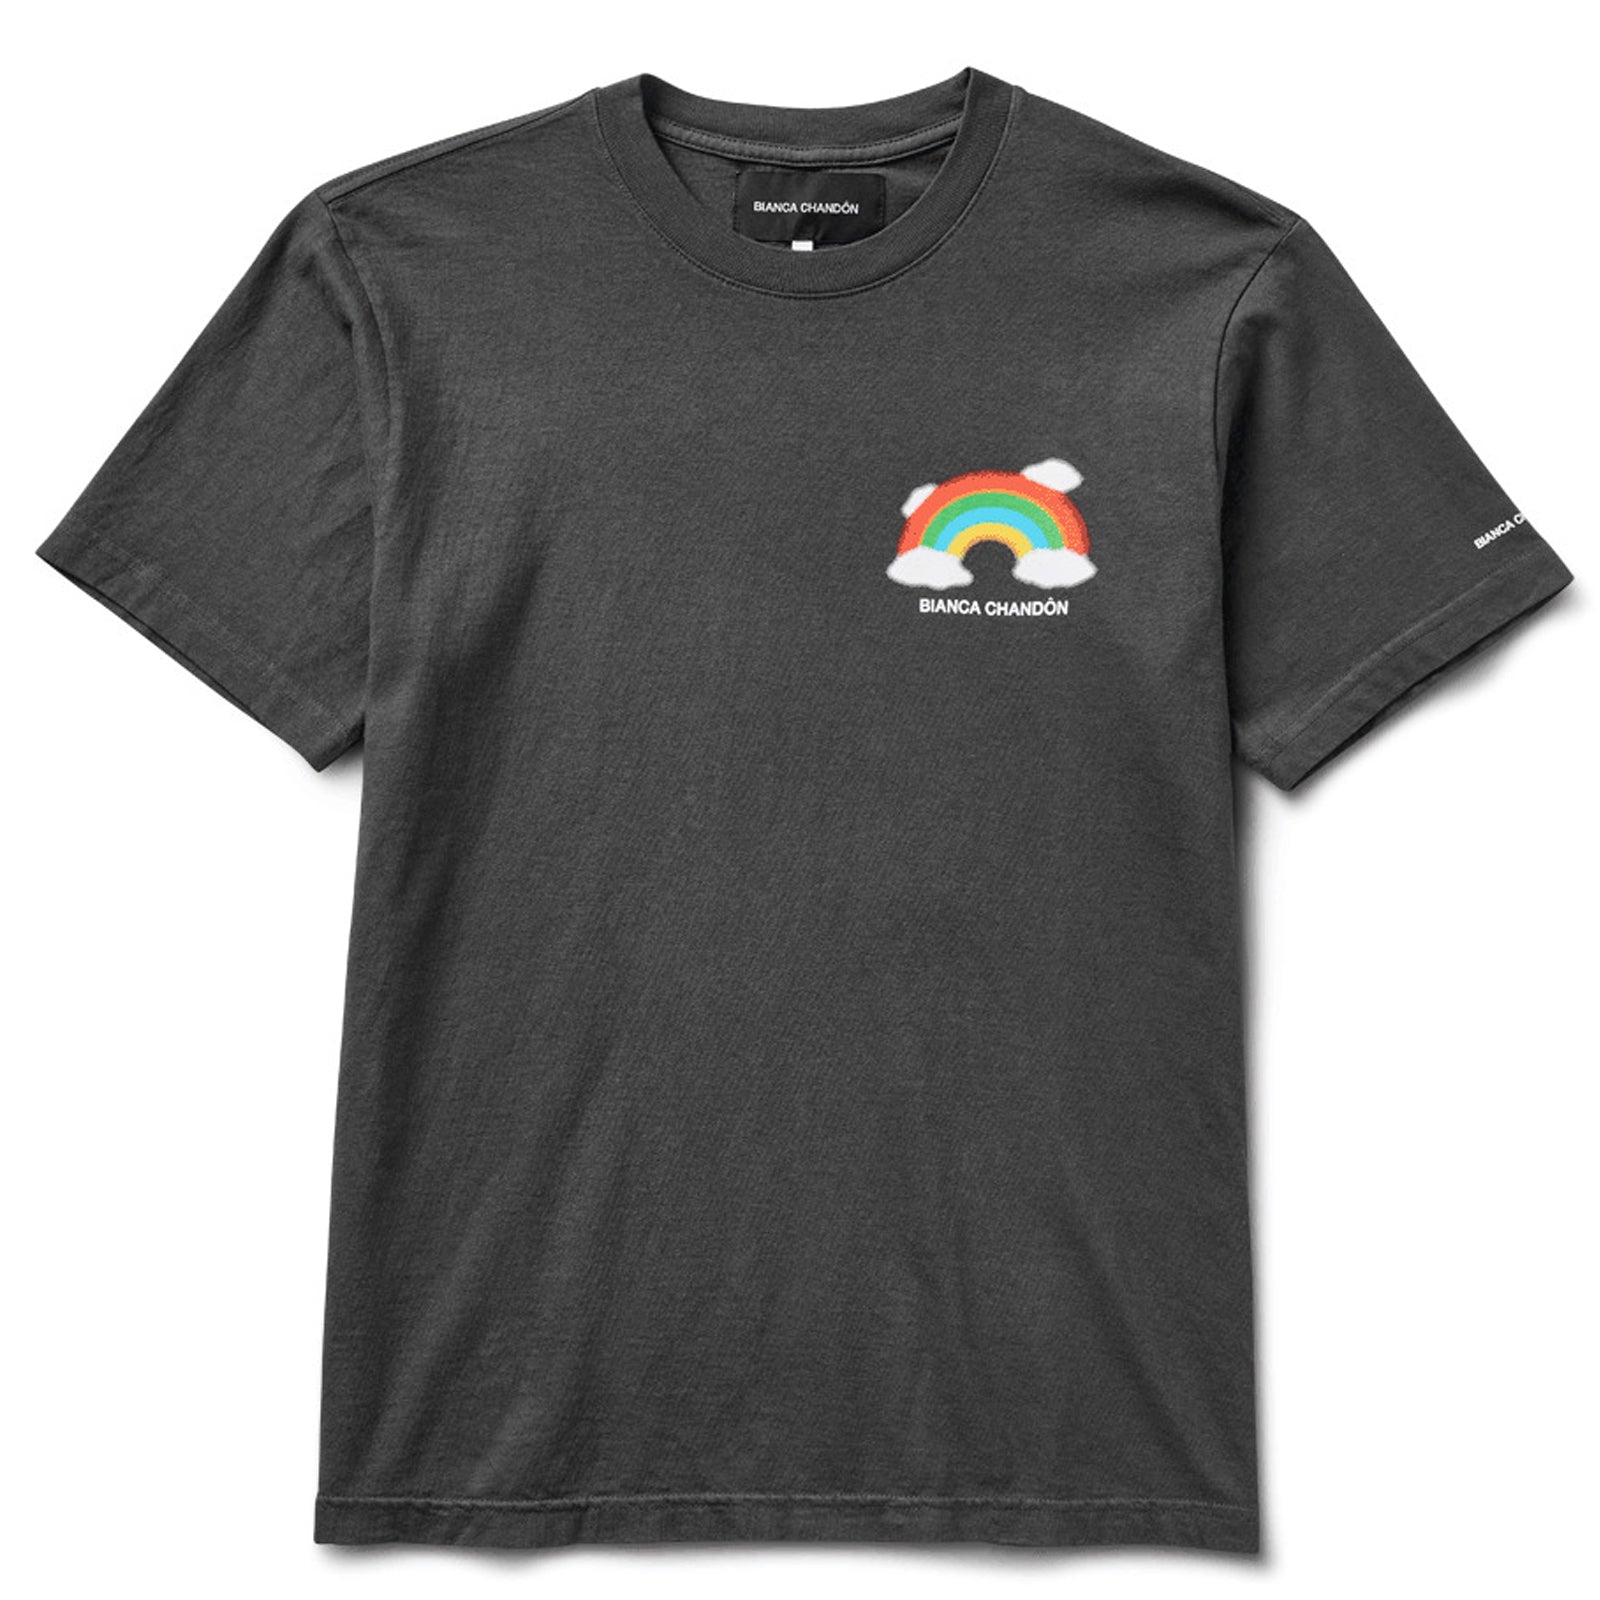 BIANCA CHANDON - Cloudy Rainbow T-Shirt - (Vintage Black) view 1